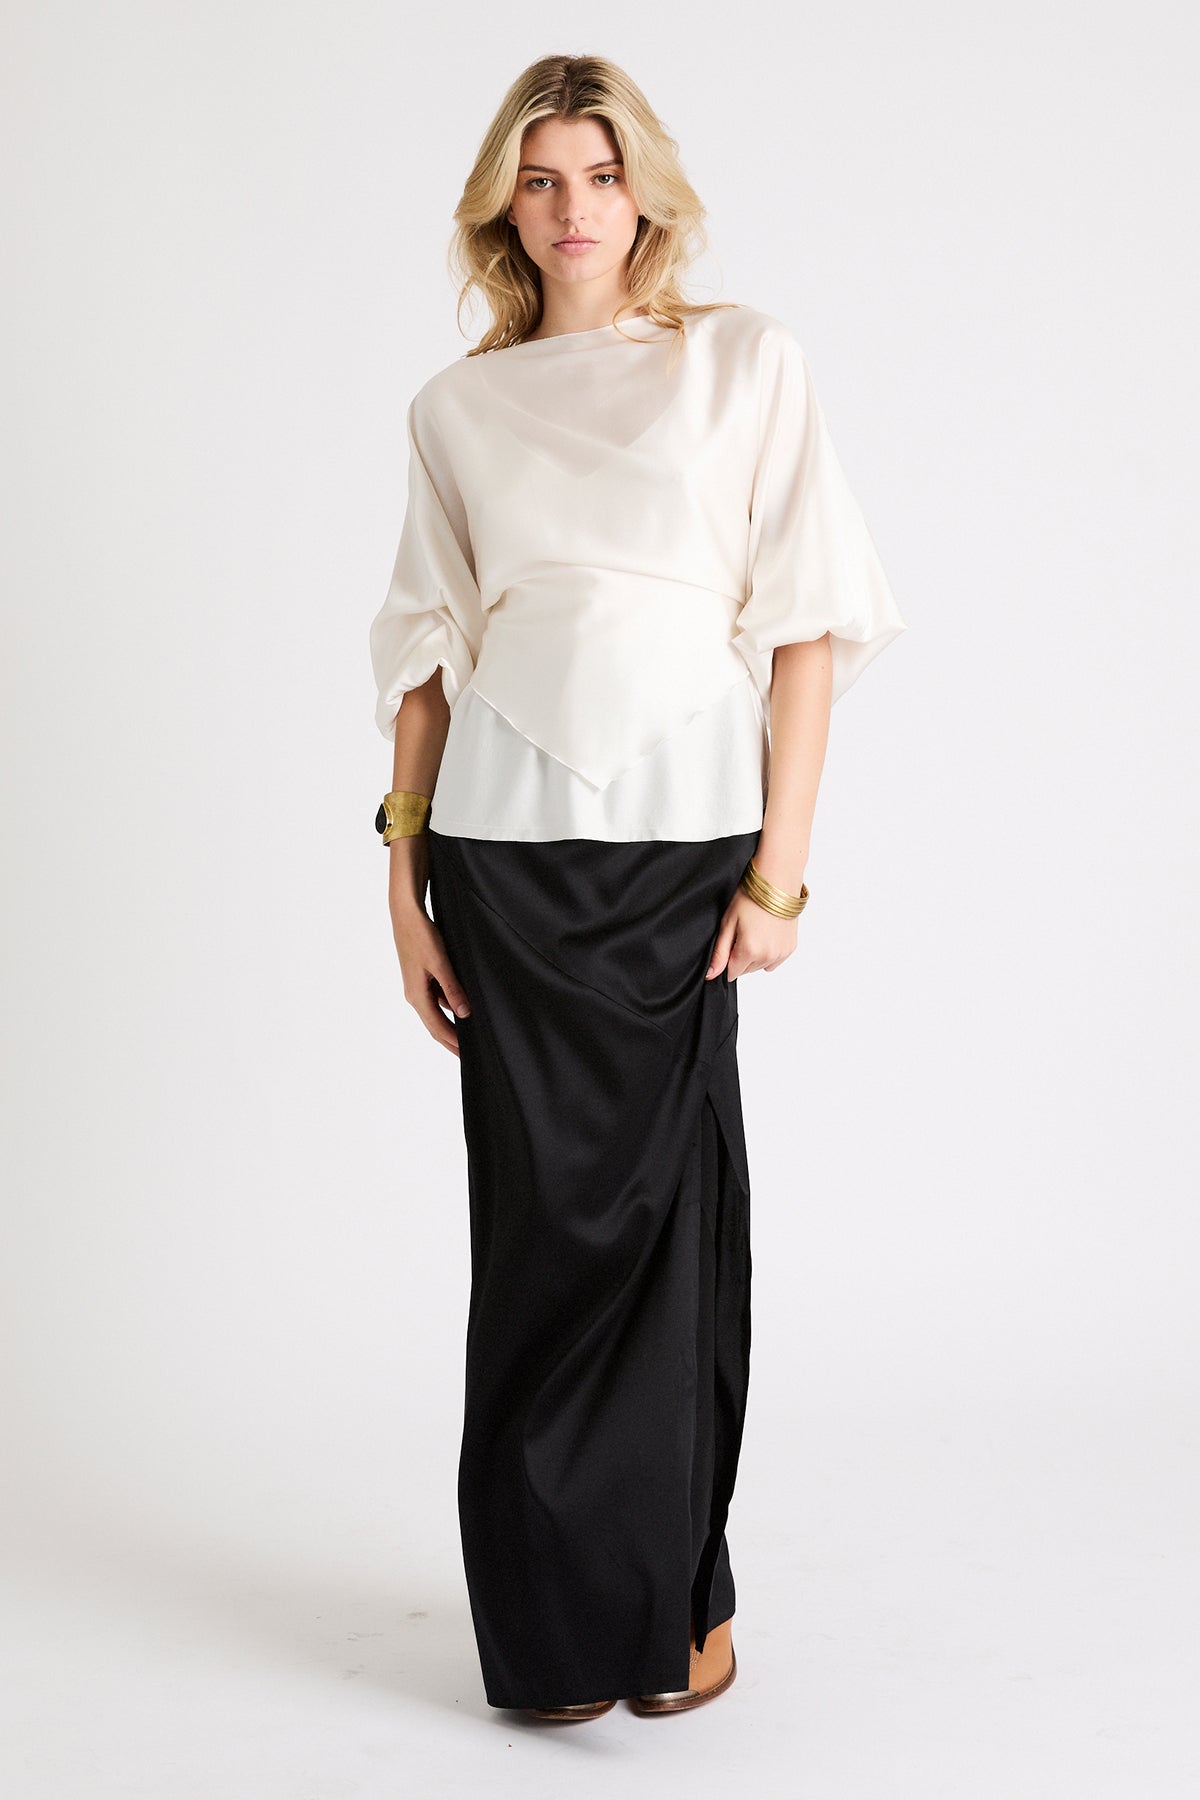 + Beryll Silk Skirt Naomi | Black - + Beryll Silk Skirt Naomi | Black - +Beryll Worn By Good People